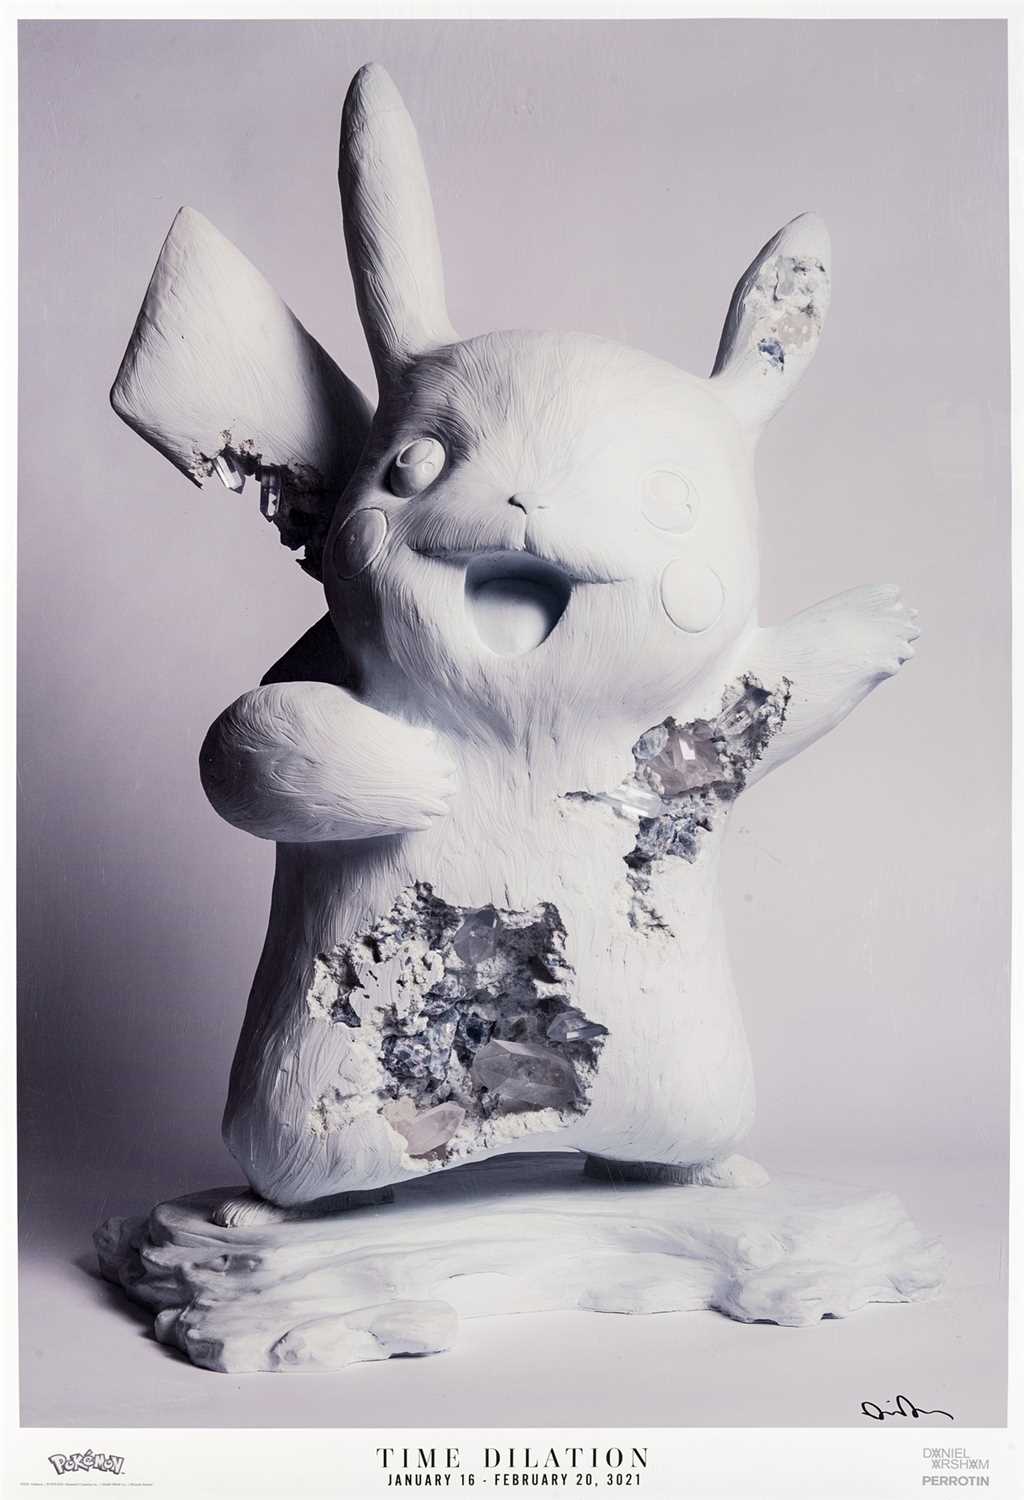 Lot 59 - Daniel Arsham (American 1980-), 'Blue Calcite Crystallized Pikachu Exhibition Poster', 2021